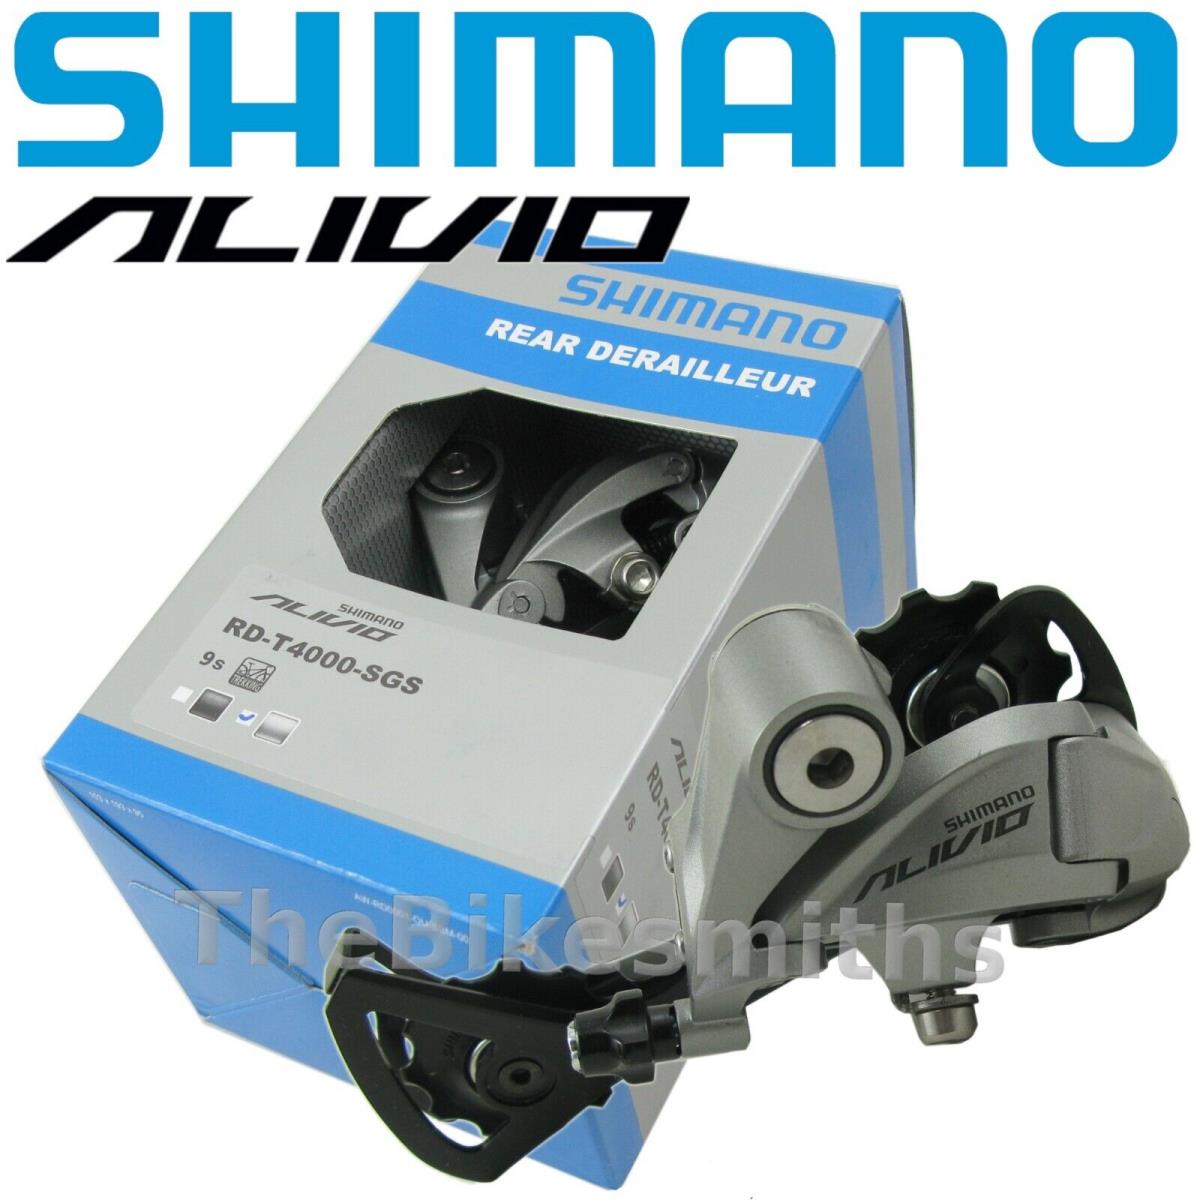 Shimano Alivio RD-T4000 Sgs 9 Speed Bike Rear Derailleur